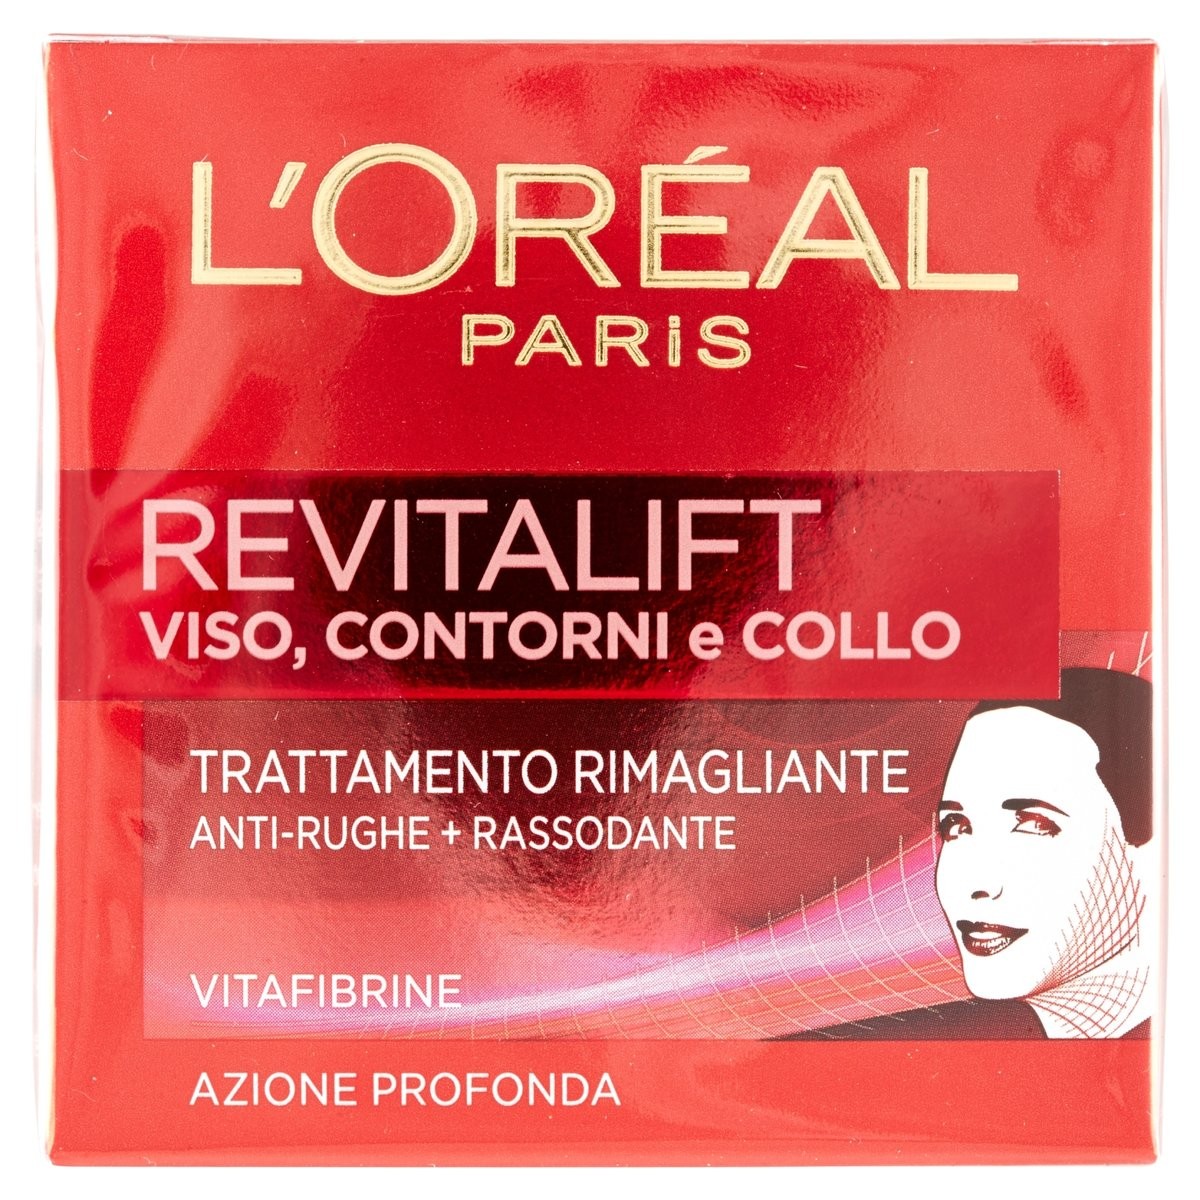 L'Oréal Paris Crema Rimagliante Revitalift